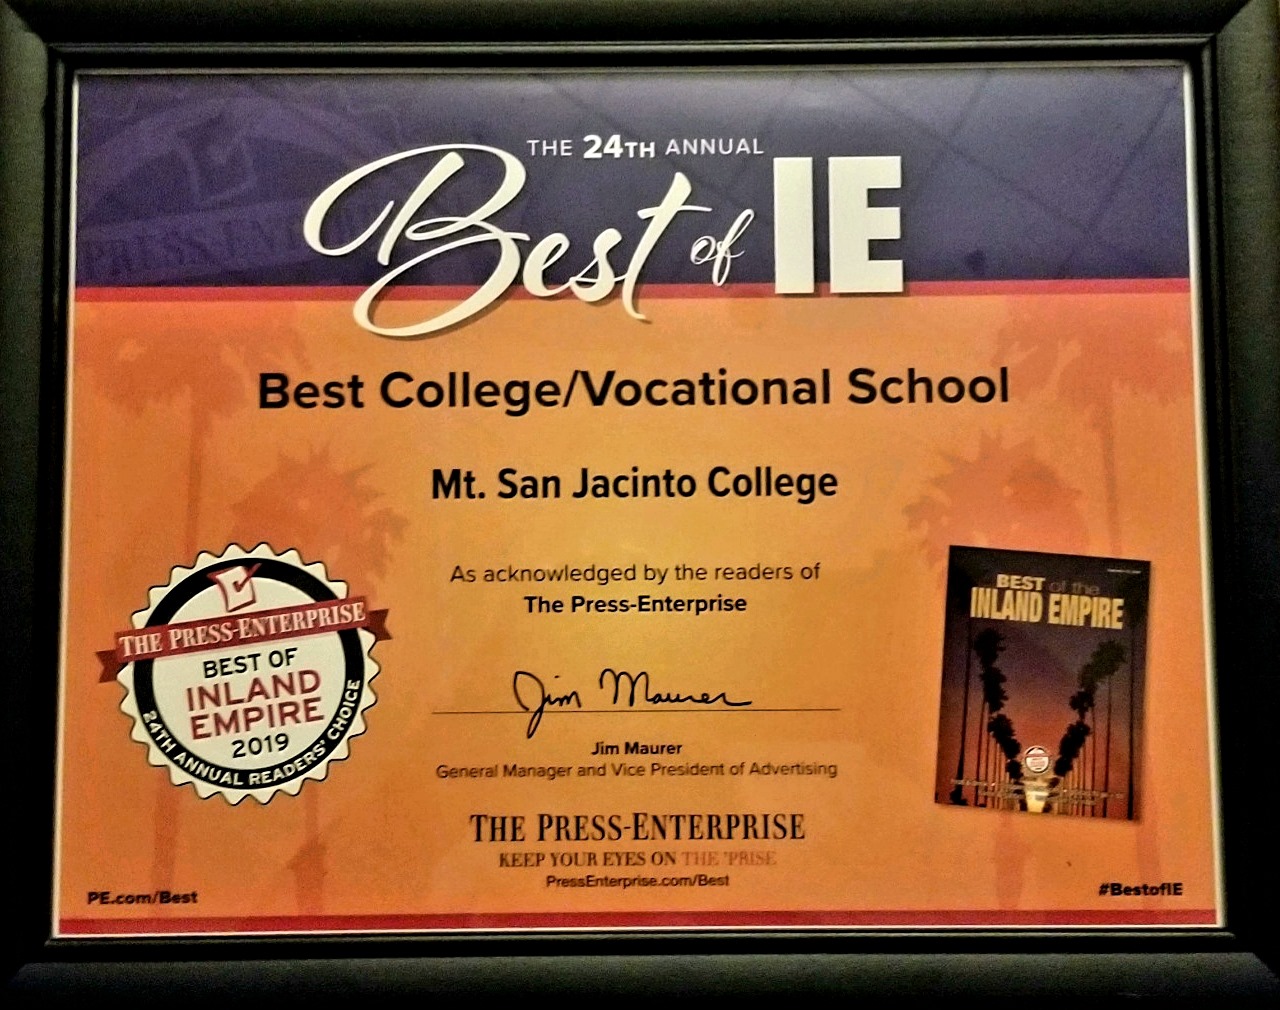 Best College/Vocational School award